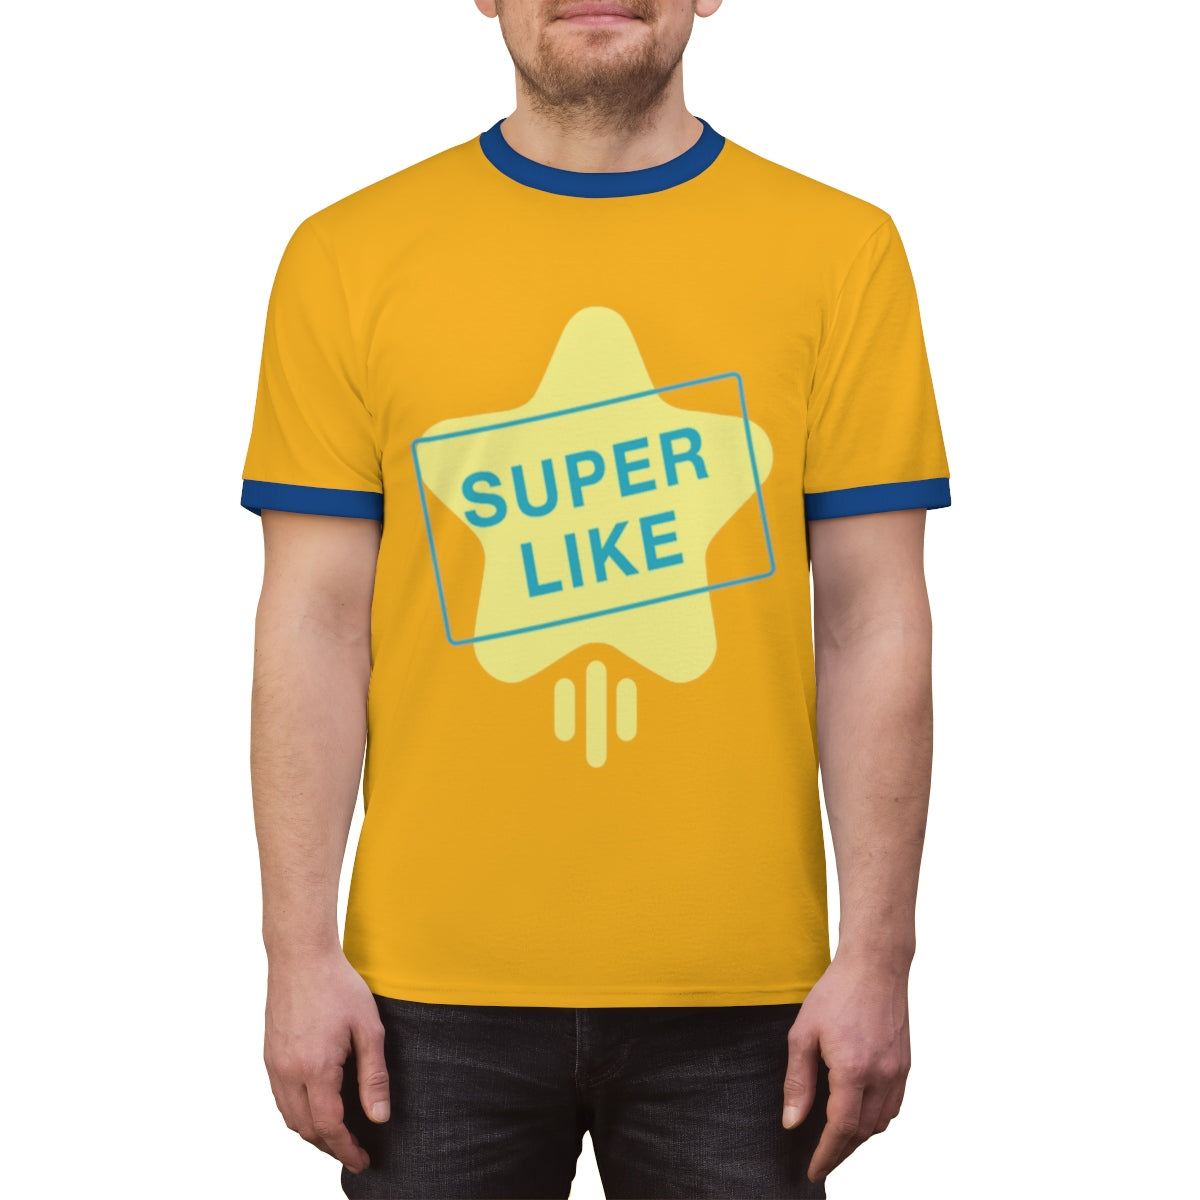 Super Like Tinder Feature Tee Shirt